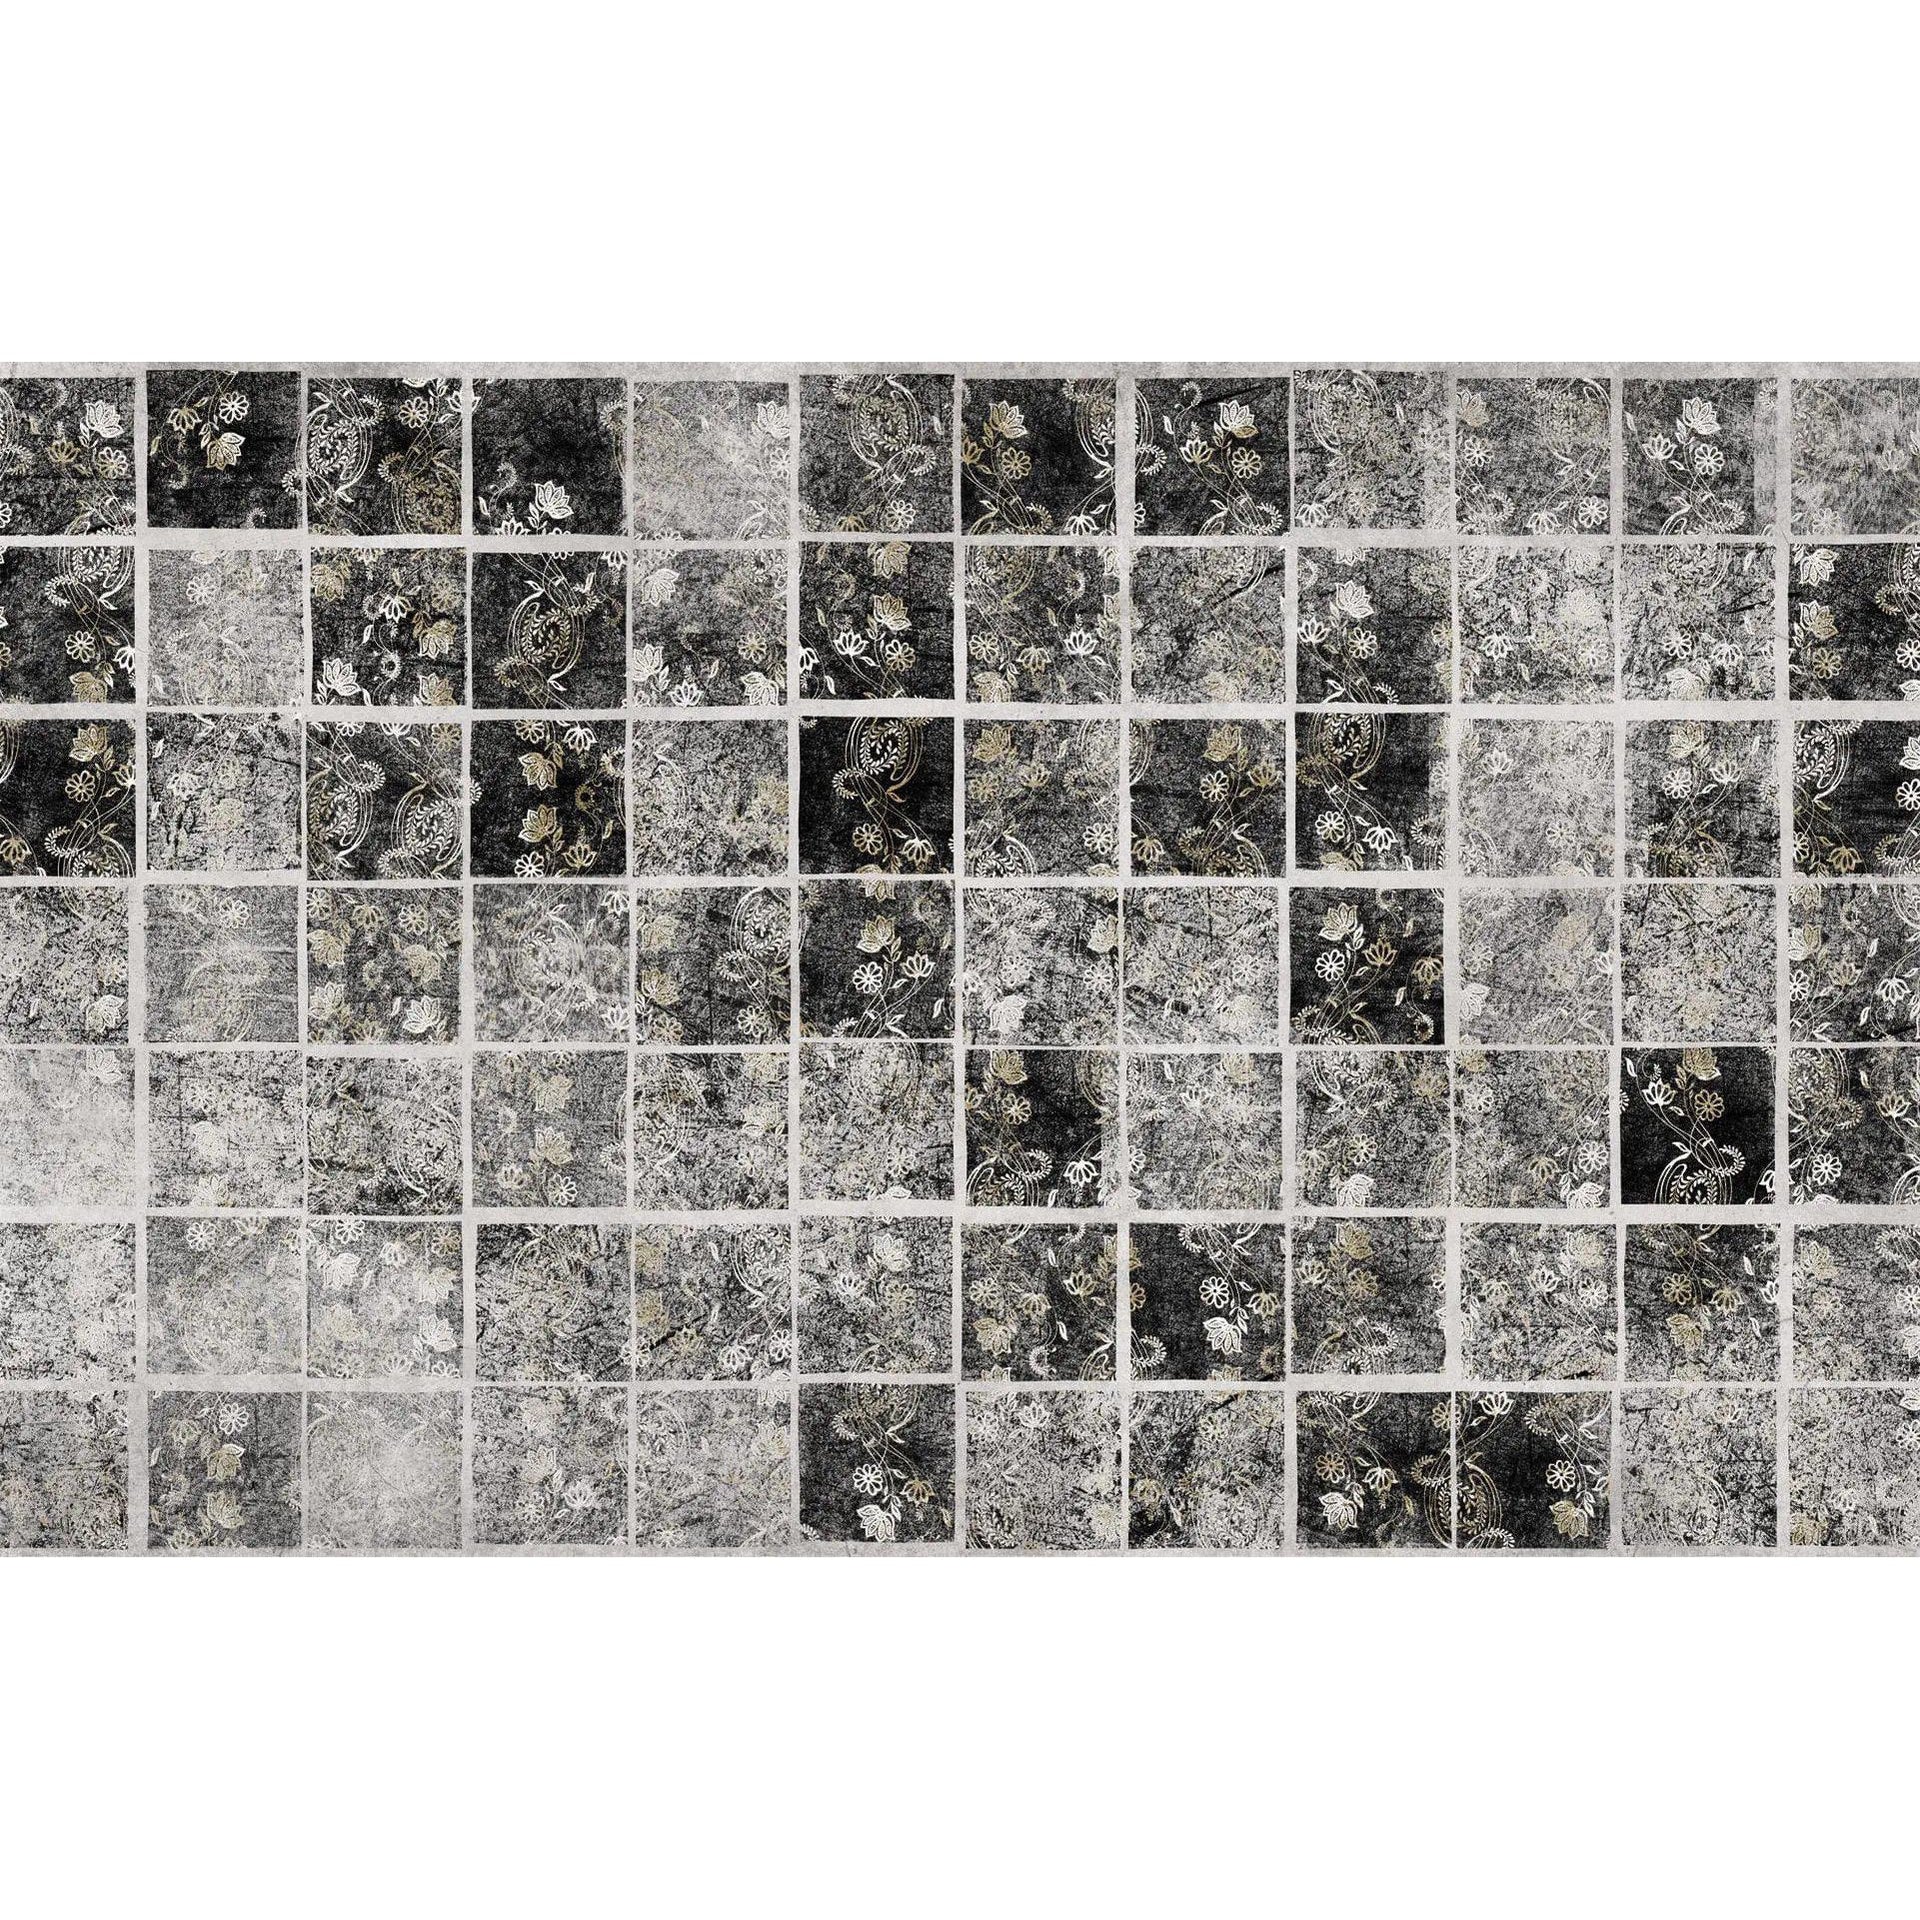 Ethereal-Digital Wallpaper-Skinwall-Grey 1-17A